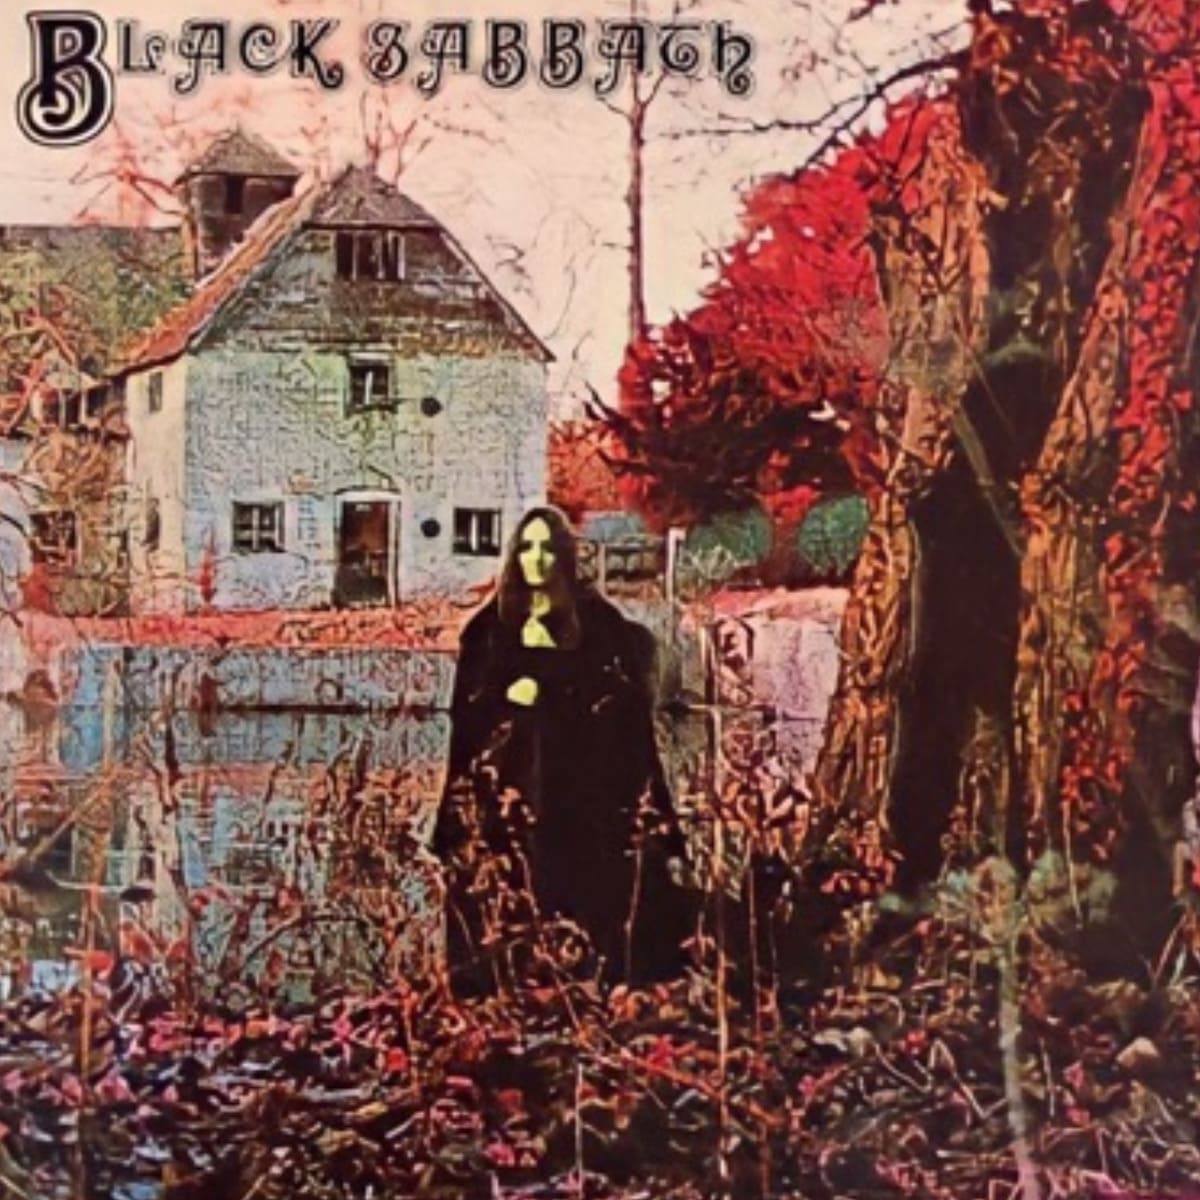 Capa do álbum "Black Sabbath" da banda Black Sabbath